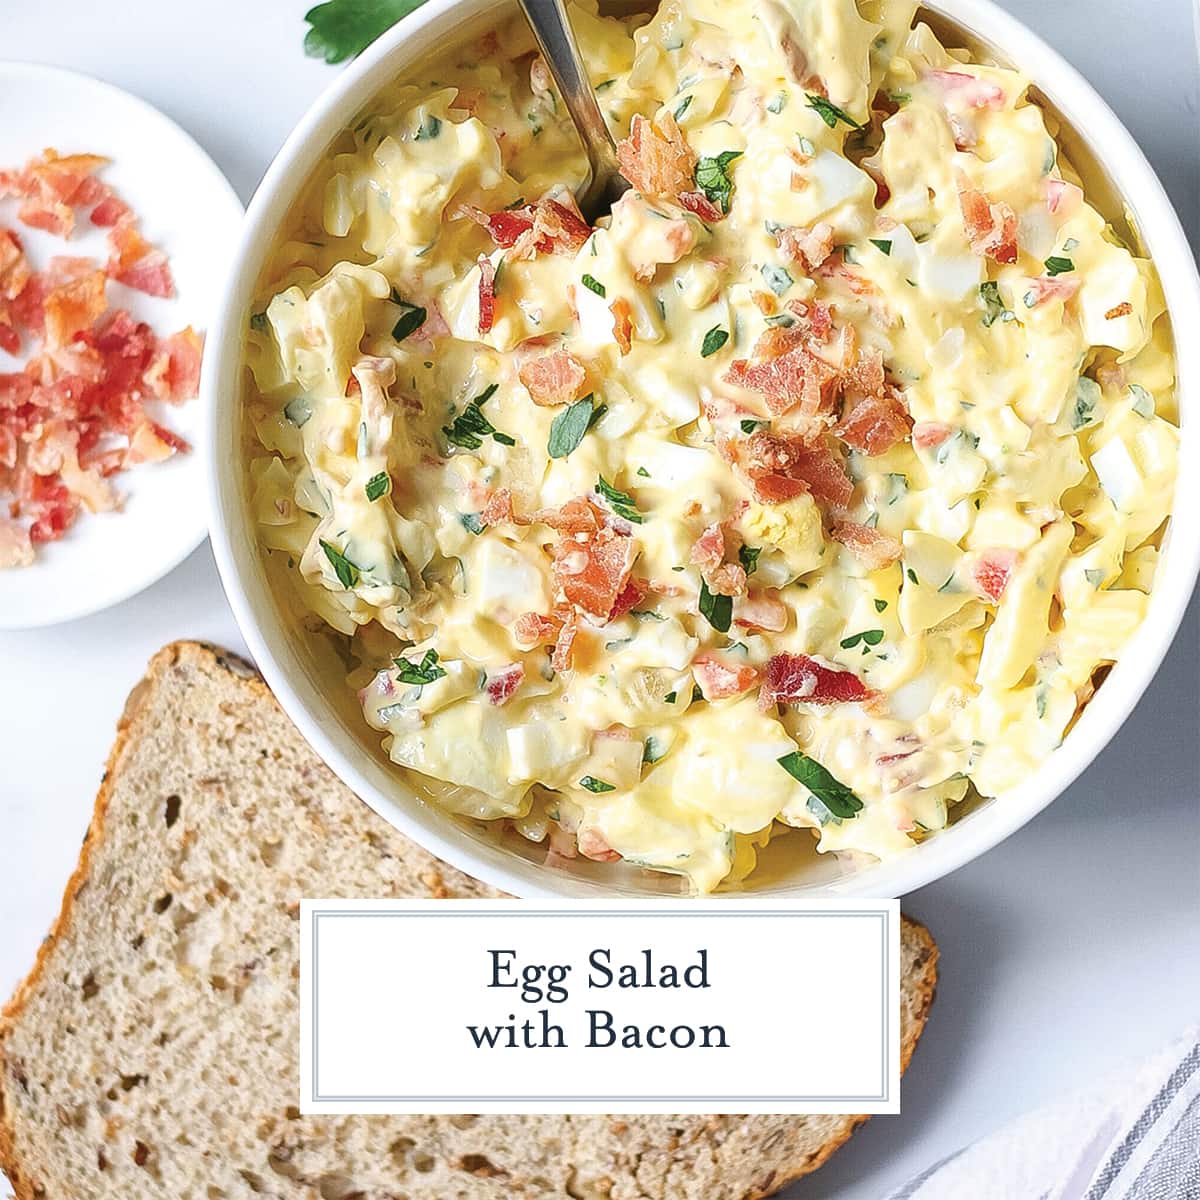 https://www.savoryexperiments.com/wp-content/uploads/2021/04/Egg-Salad-FB.jpg